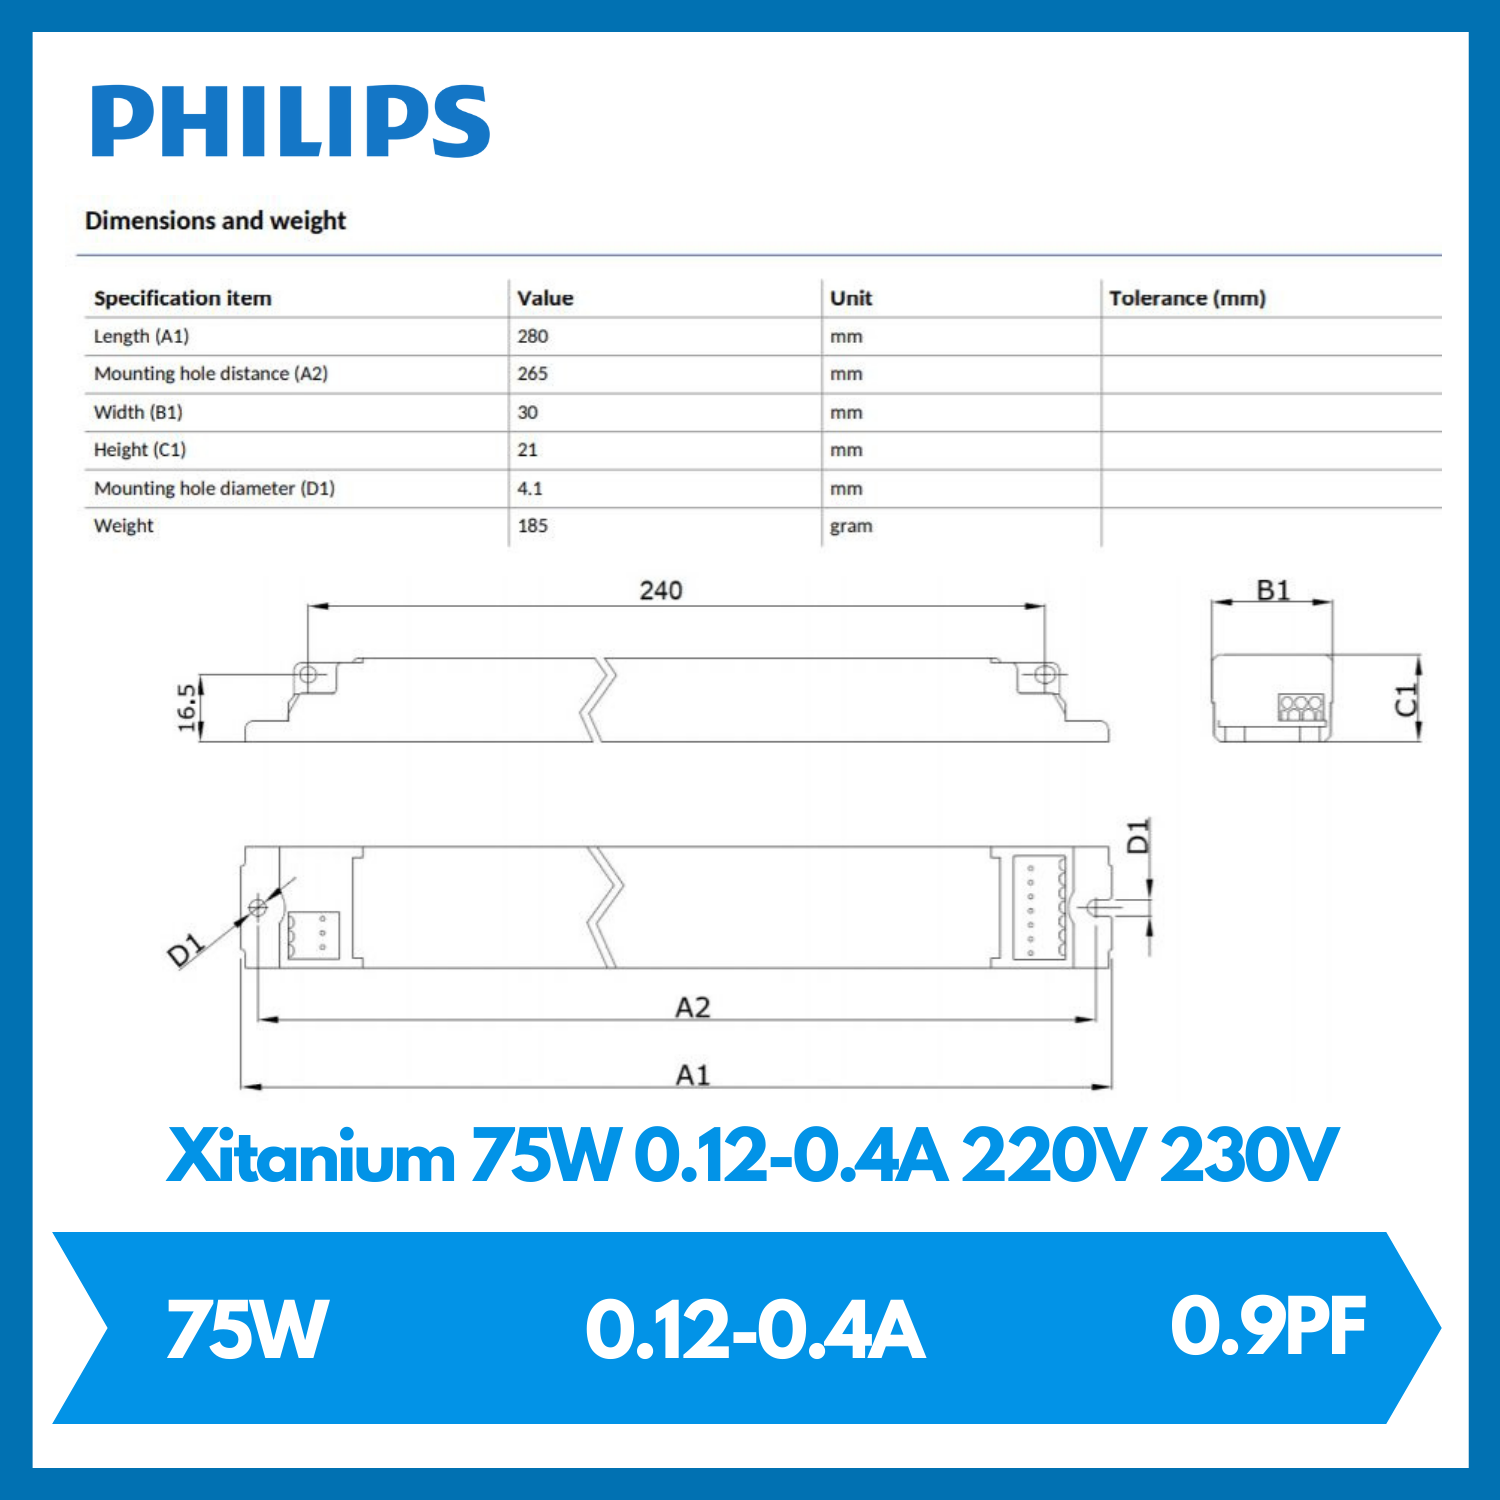 PHILIPS Xitanium 75W 0.12-0.4A 220V 230V